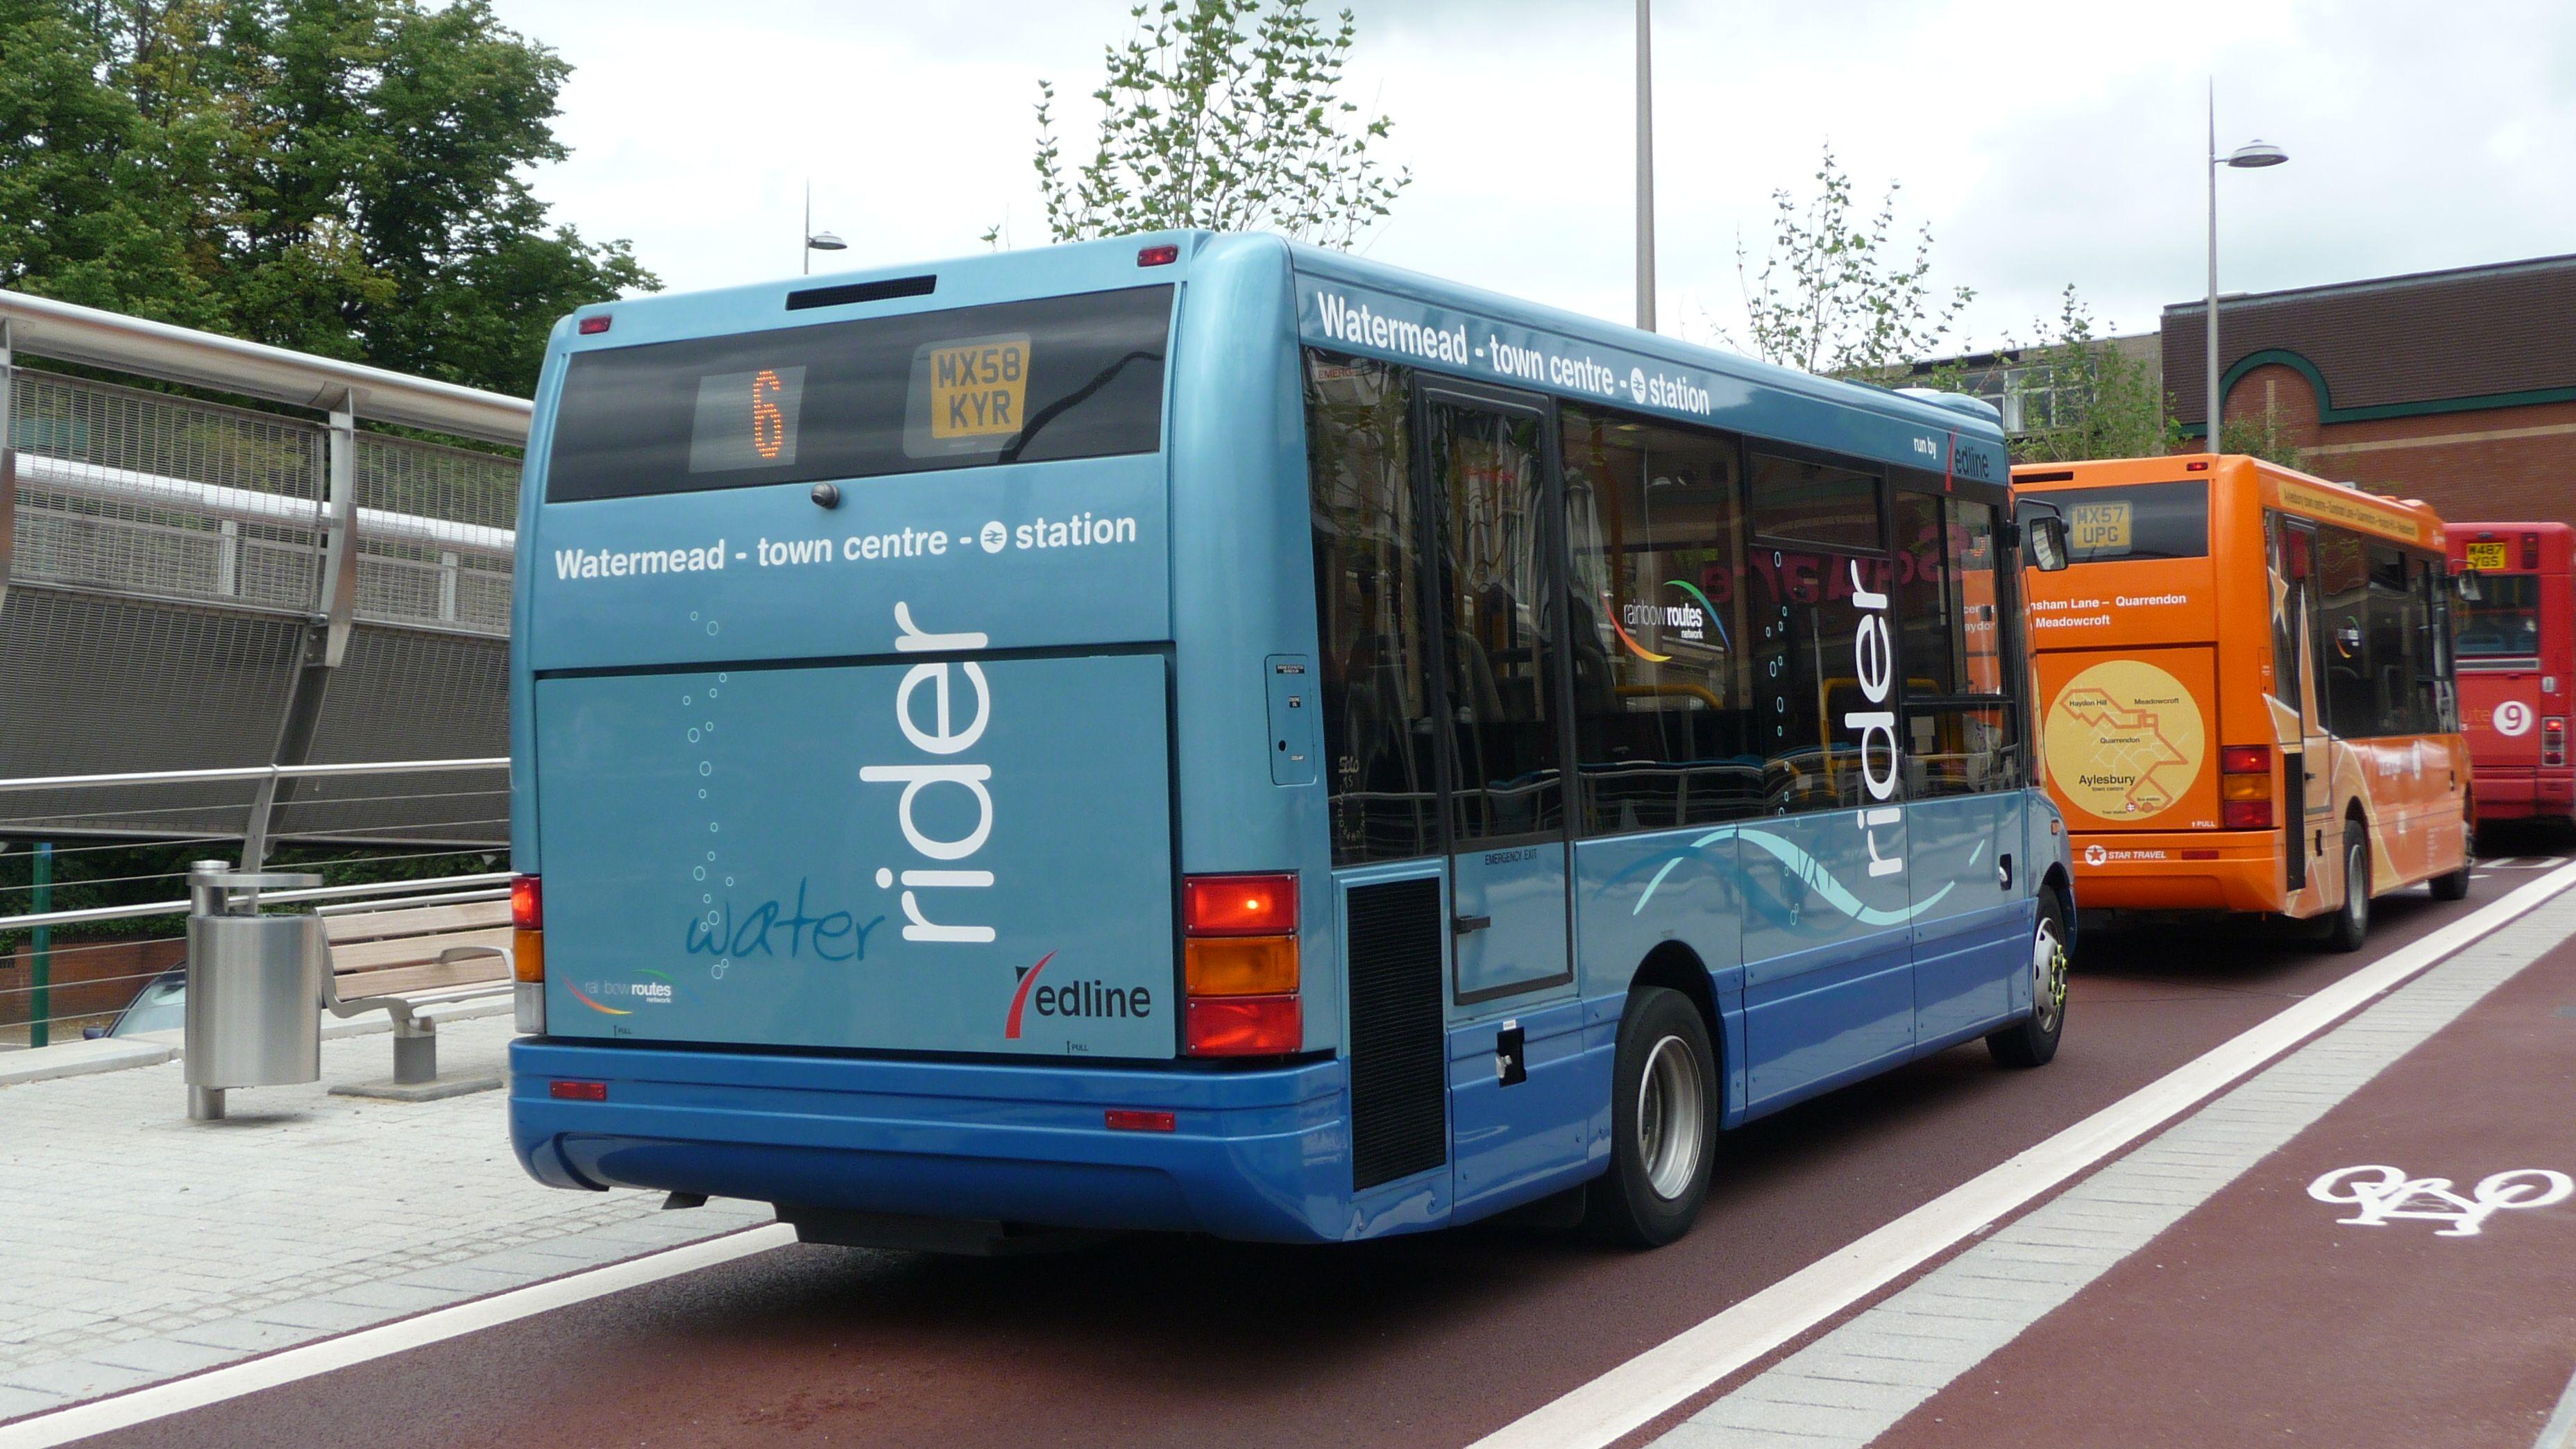 Blue and Red Line Bus Logo - File:Redline Buses MX58 KYR rear.JPG - Wikimedia Commons